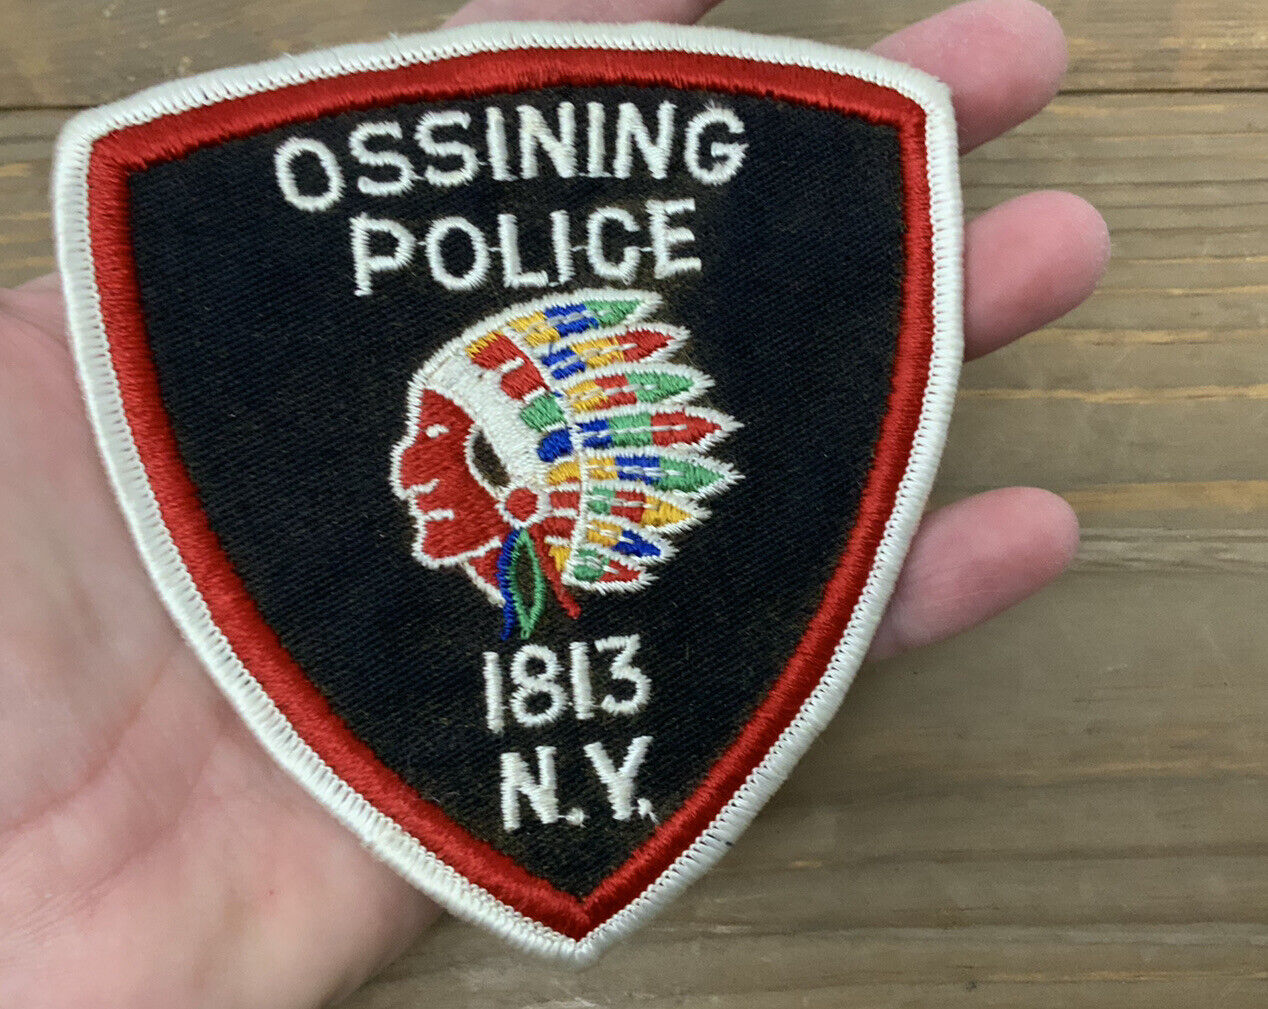 Ossining Police Patch 1813 New York Indian Headdress War Bonnet Large 4.25”